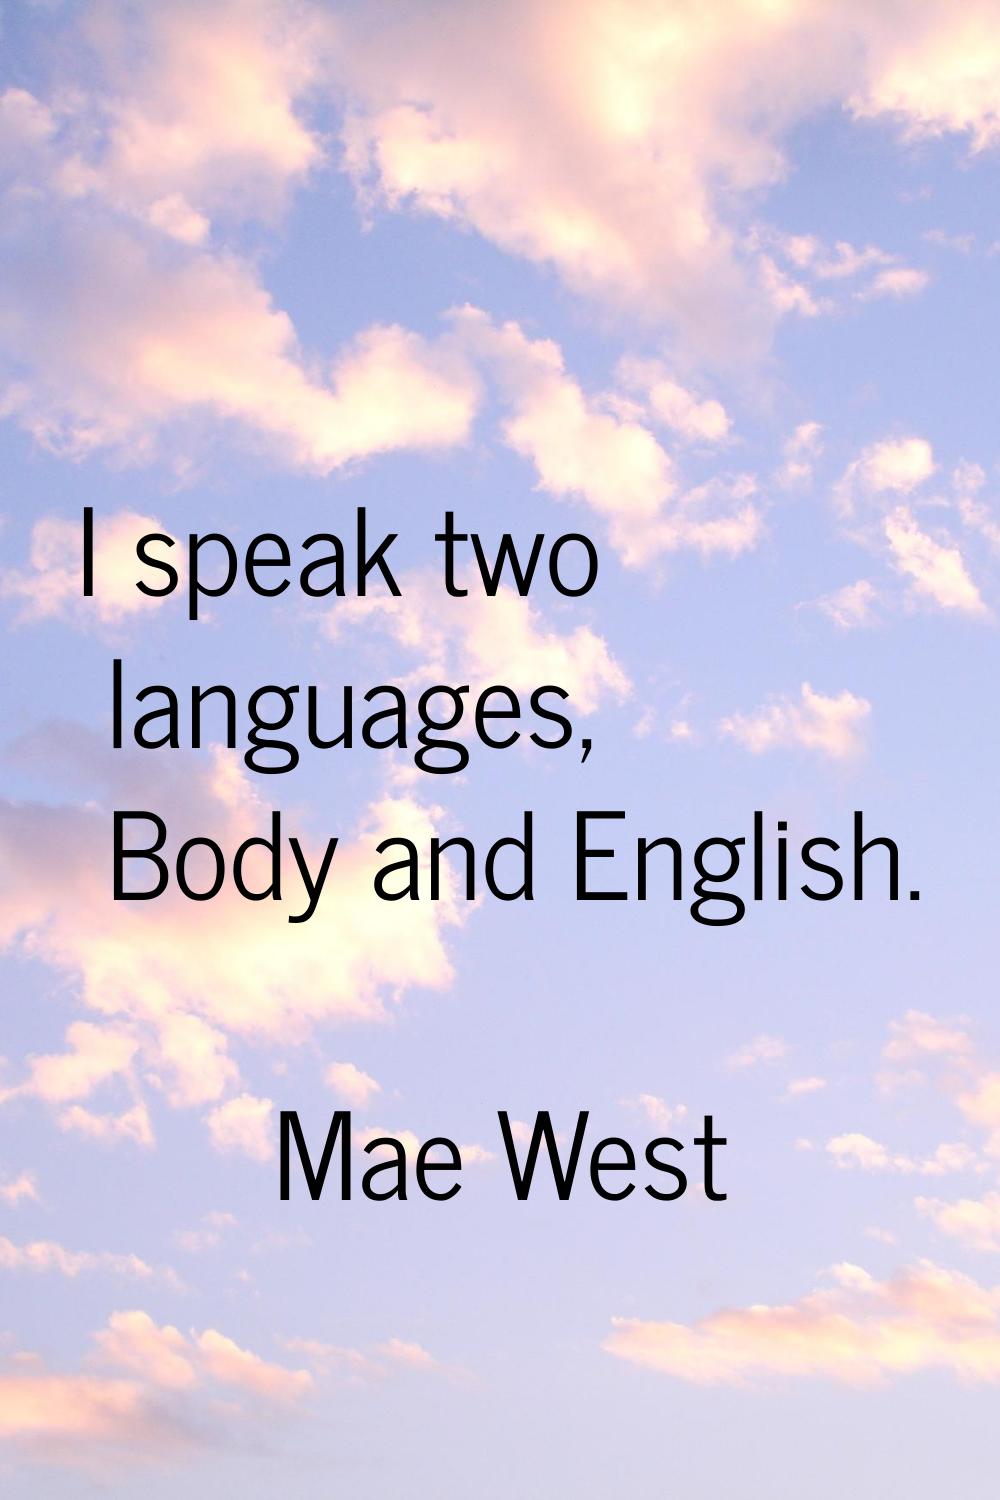 I speak two languages, Body and English.